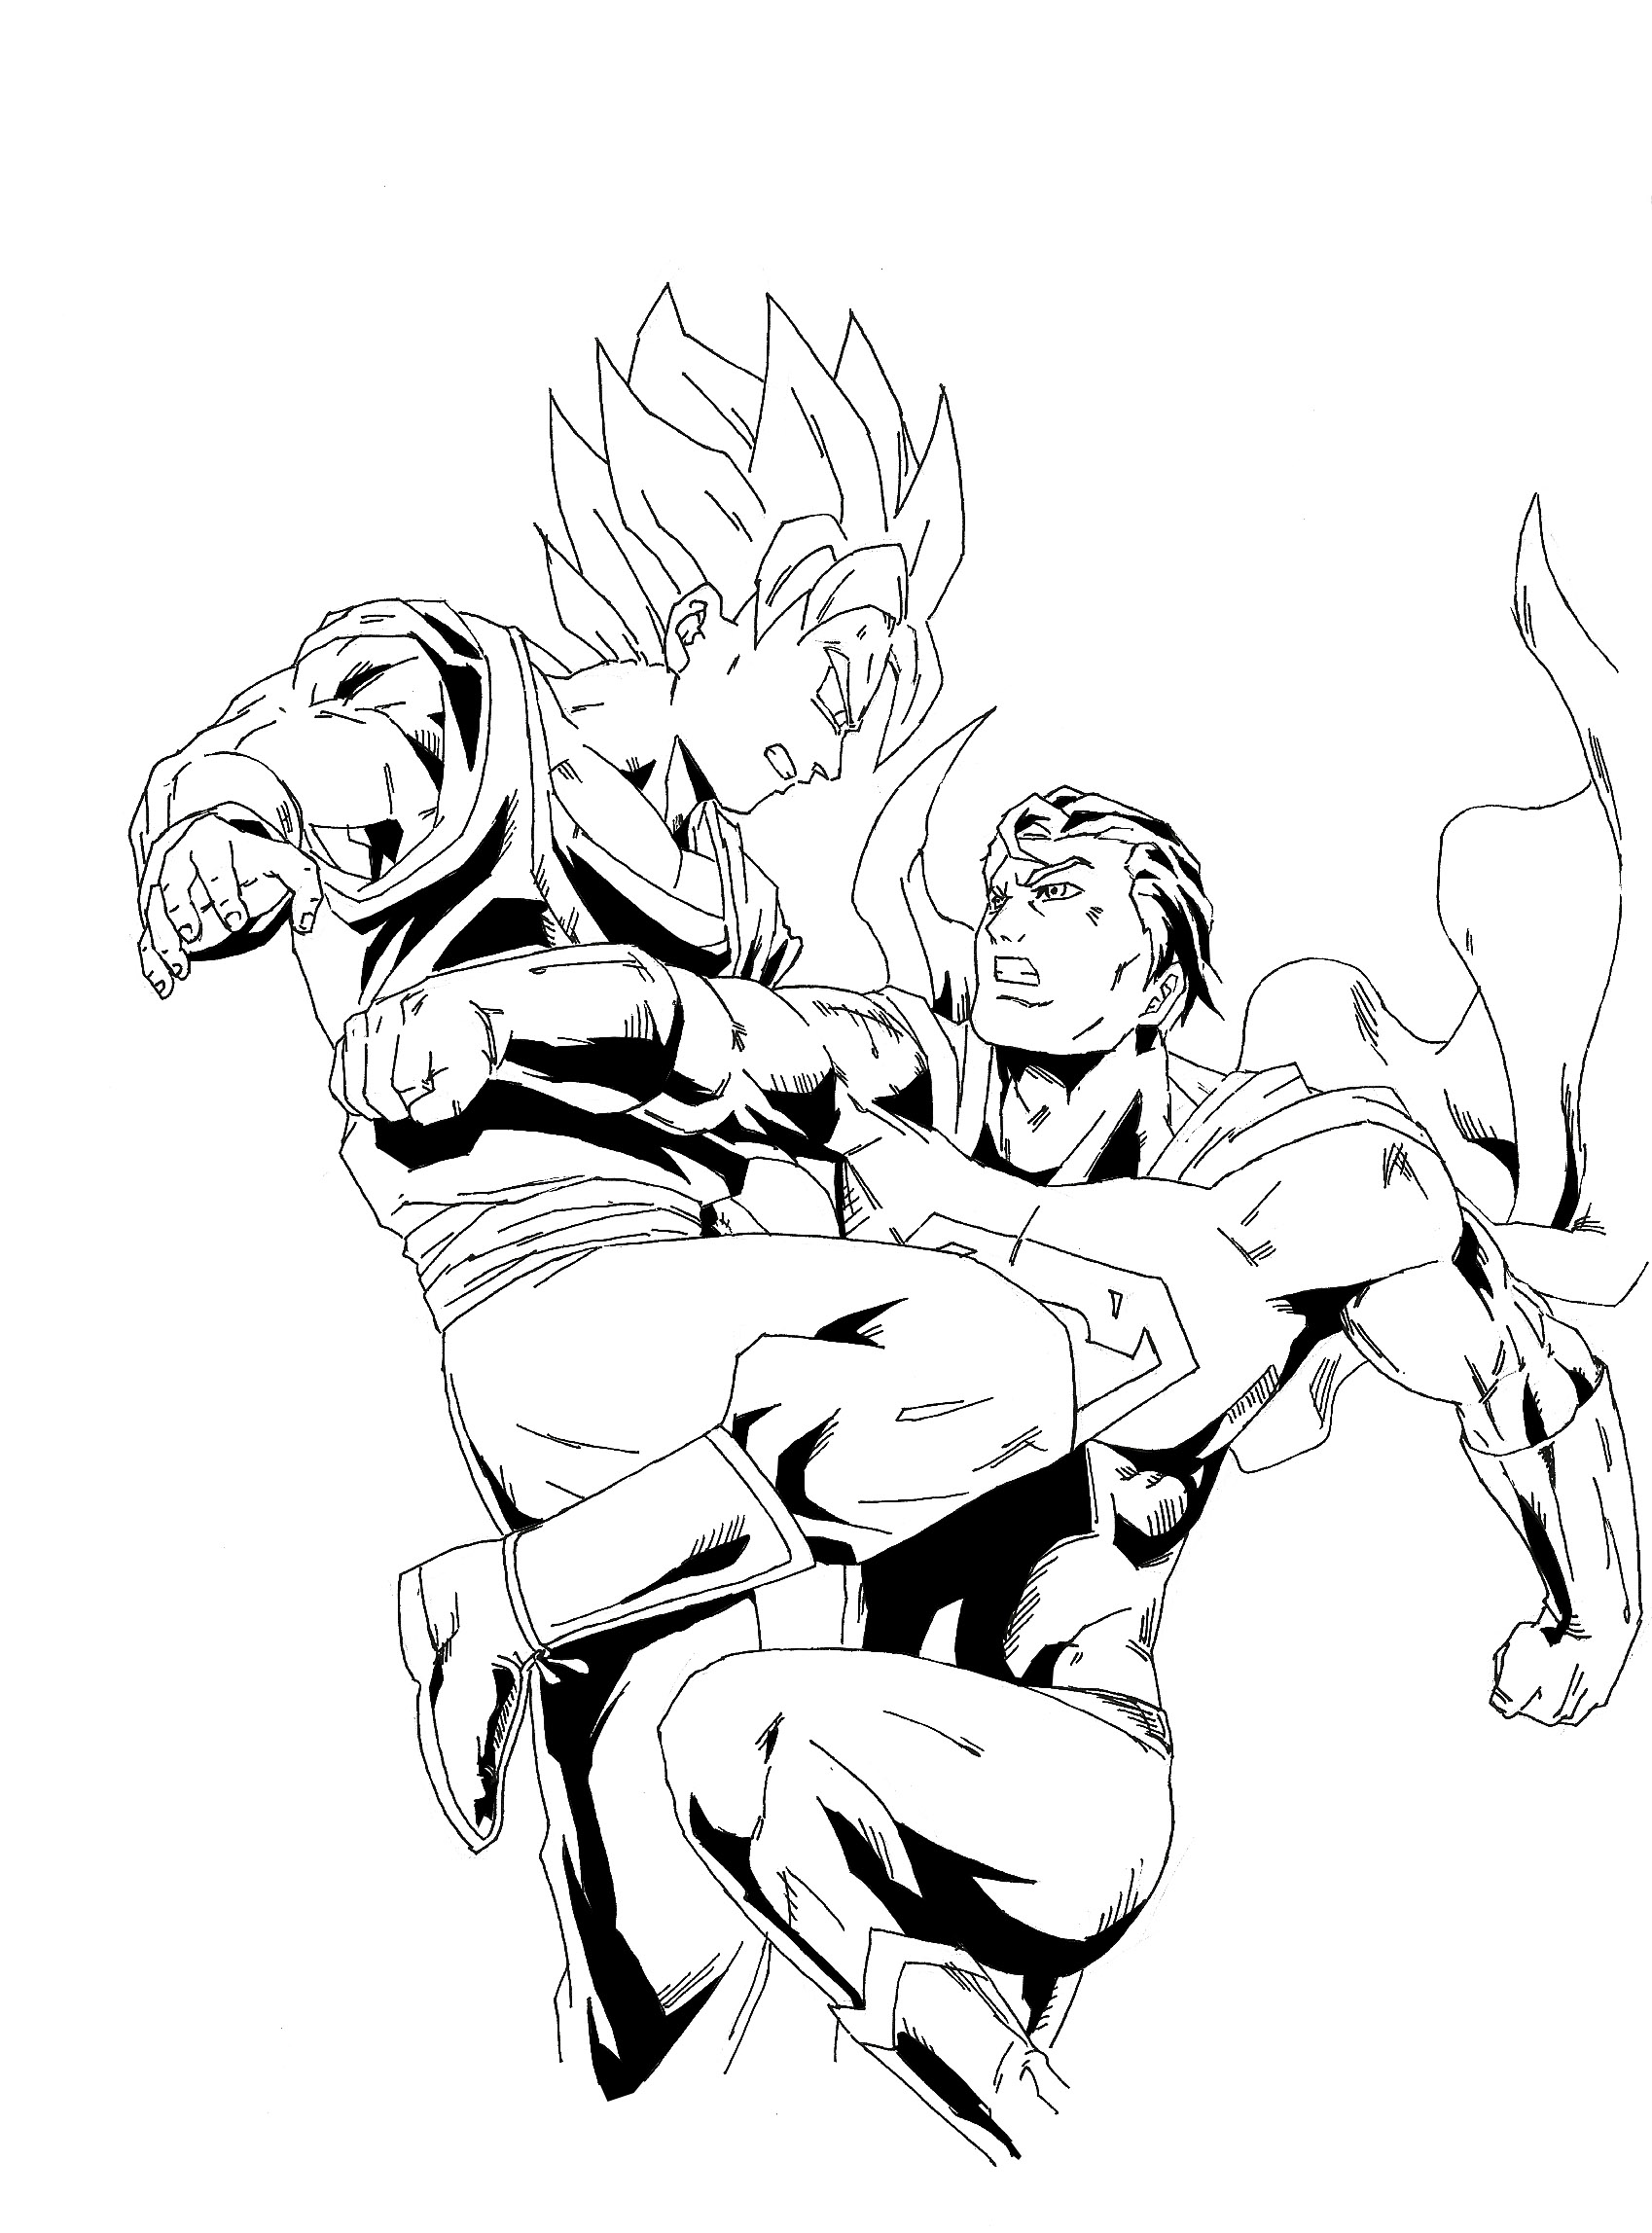 Goku versus Superman by stryfers on DeviantArt